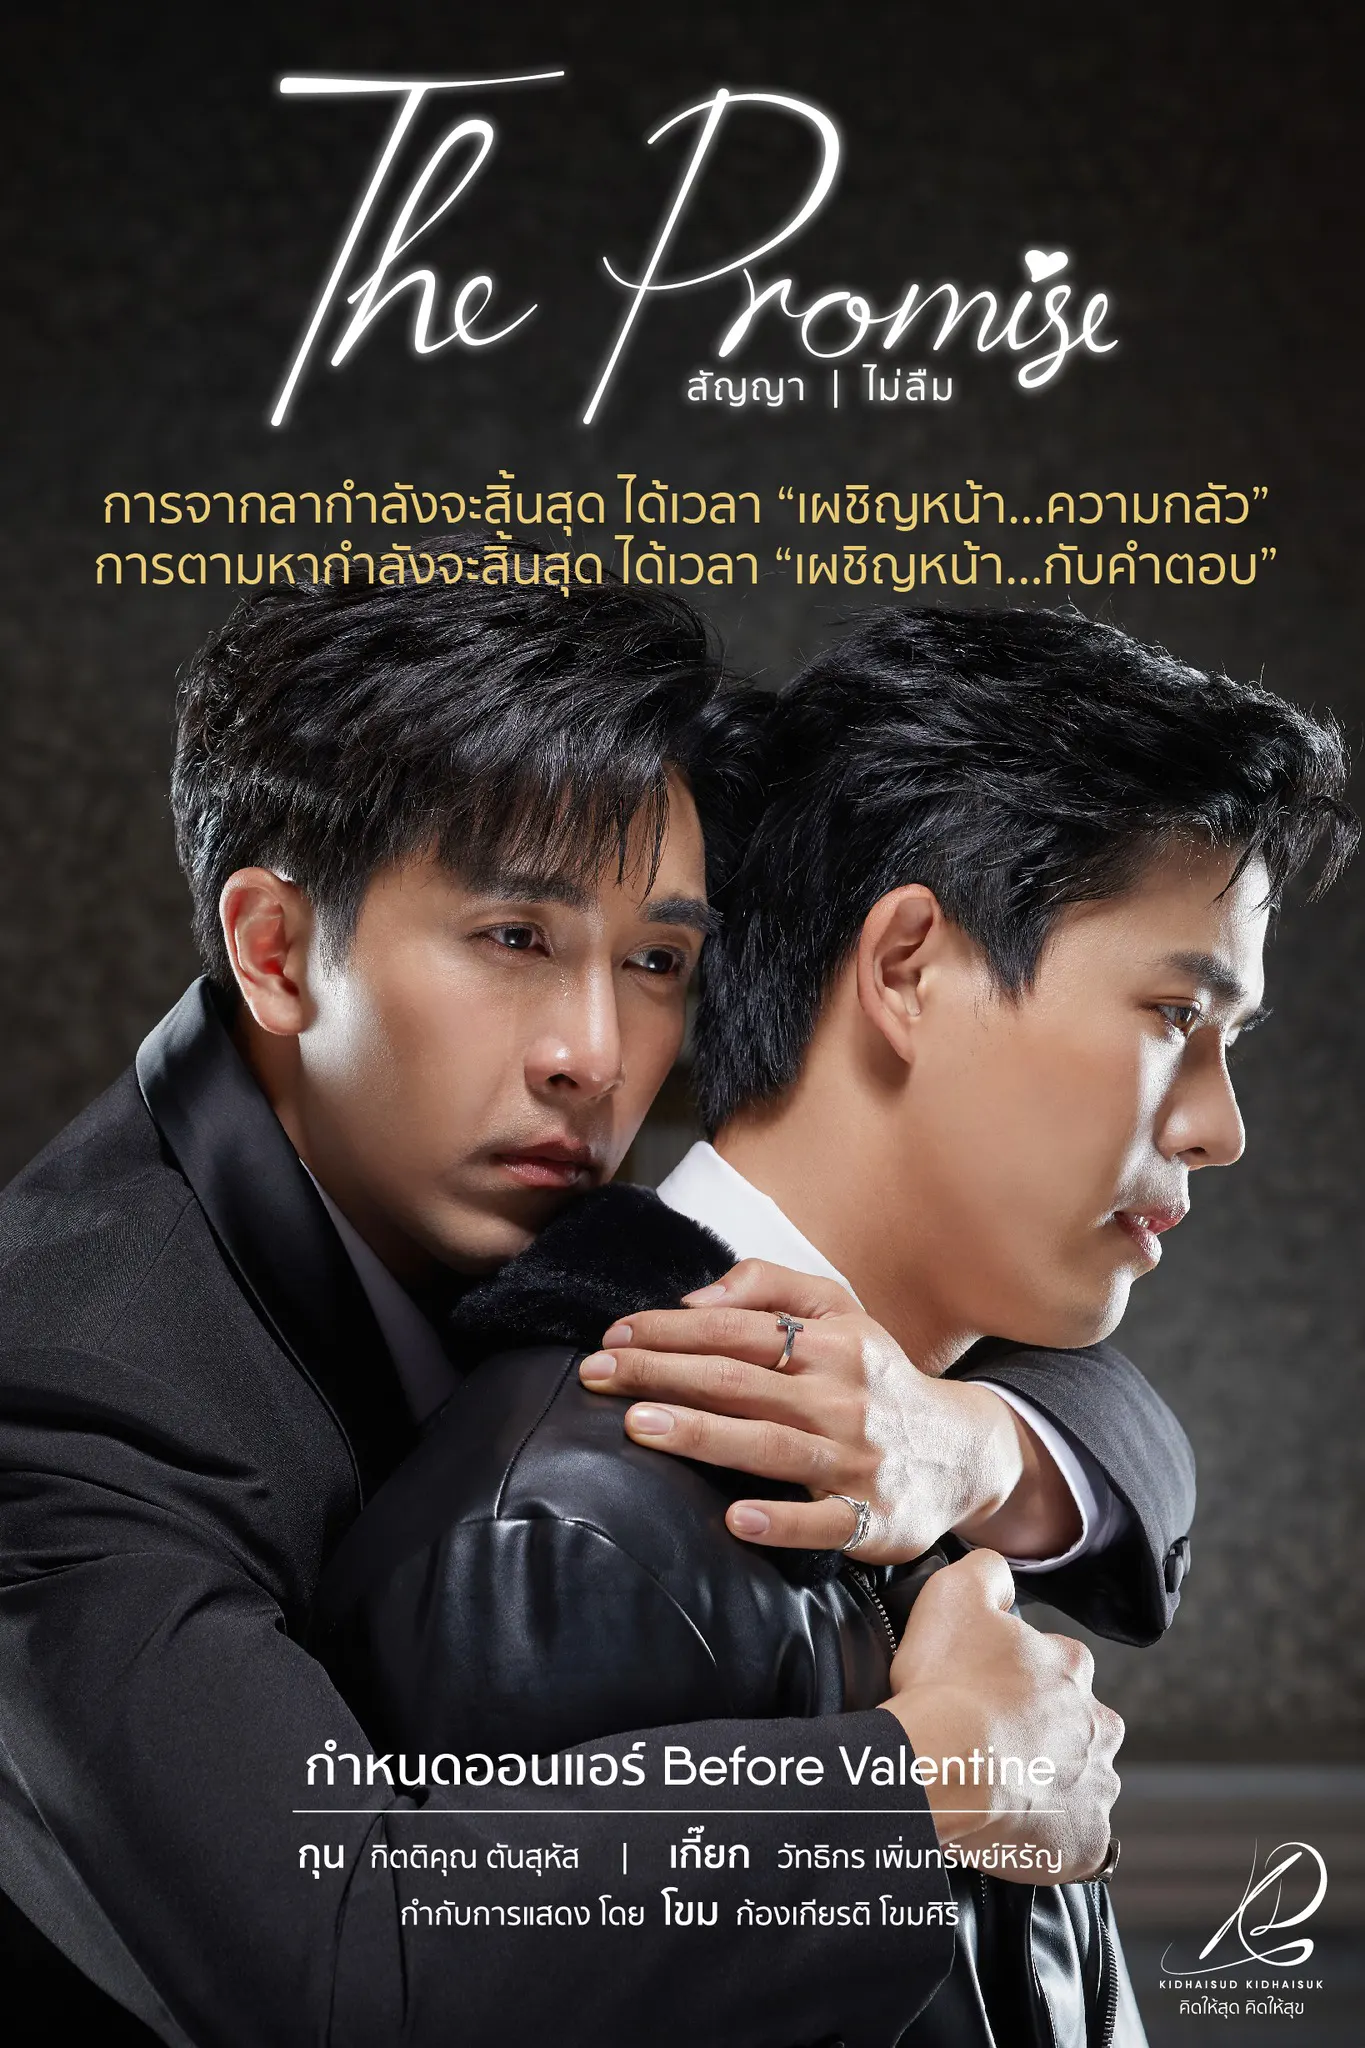 Kiak Wattikorn Permsubhirun in The Promise Thai Drama